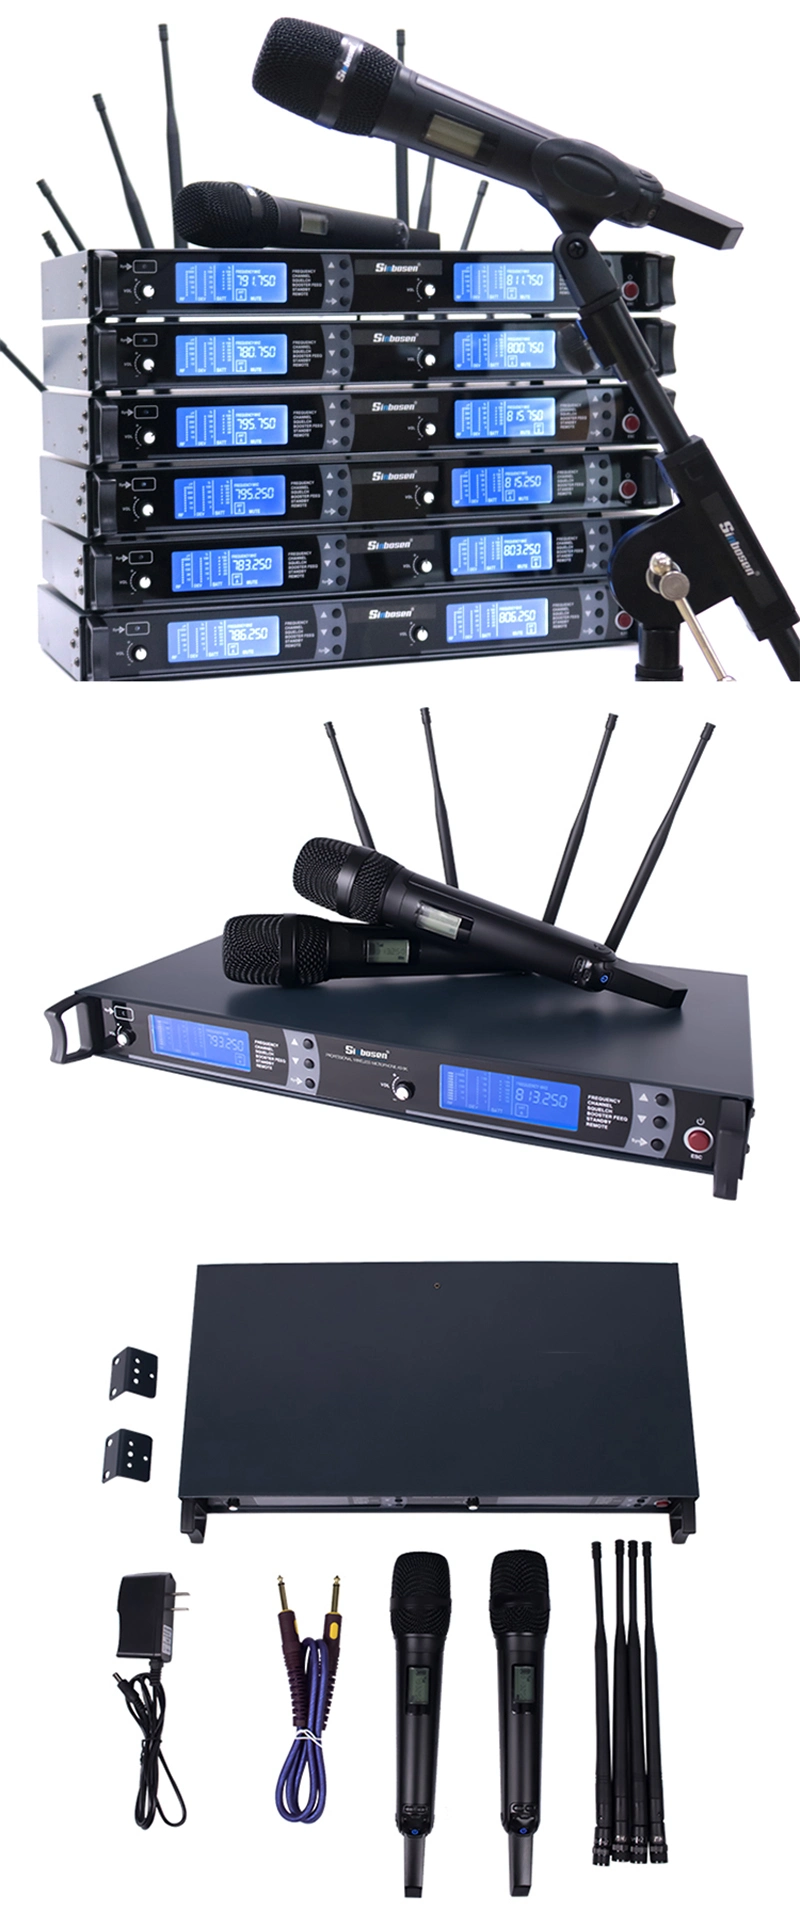 Hot Sale Wireless Communication and Karaoke Microphone Use UHF Wireless Microphone Skm9000